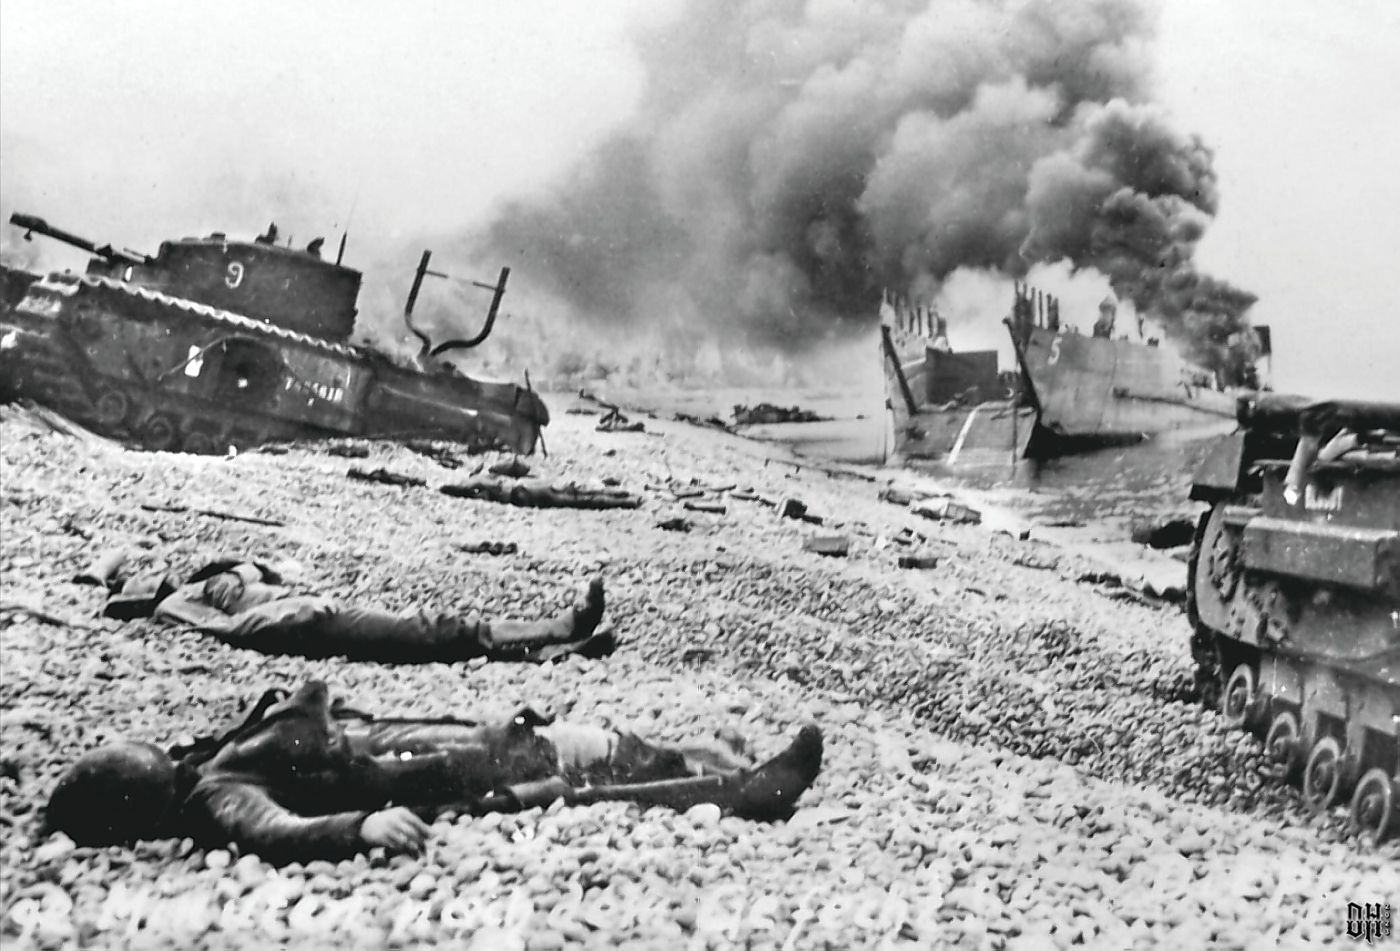 DH - WW2 Dead Canadian Soldiers 2 - Dead Canadians on Dieppe beach - 1942.jpg